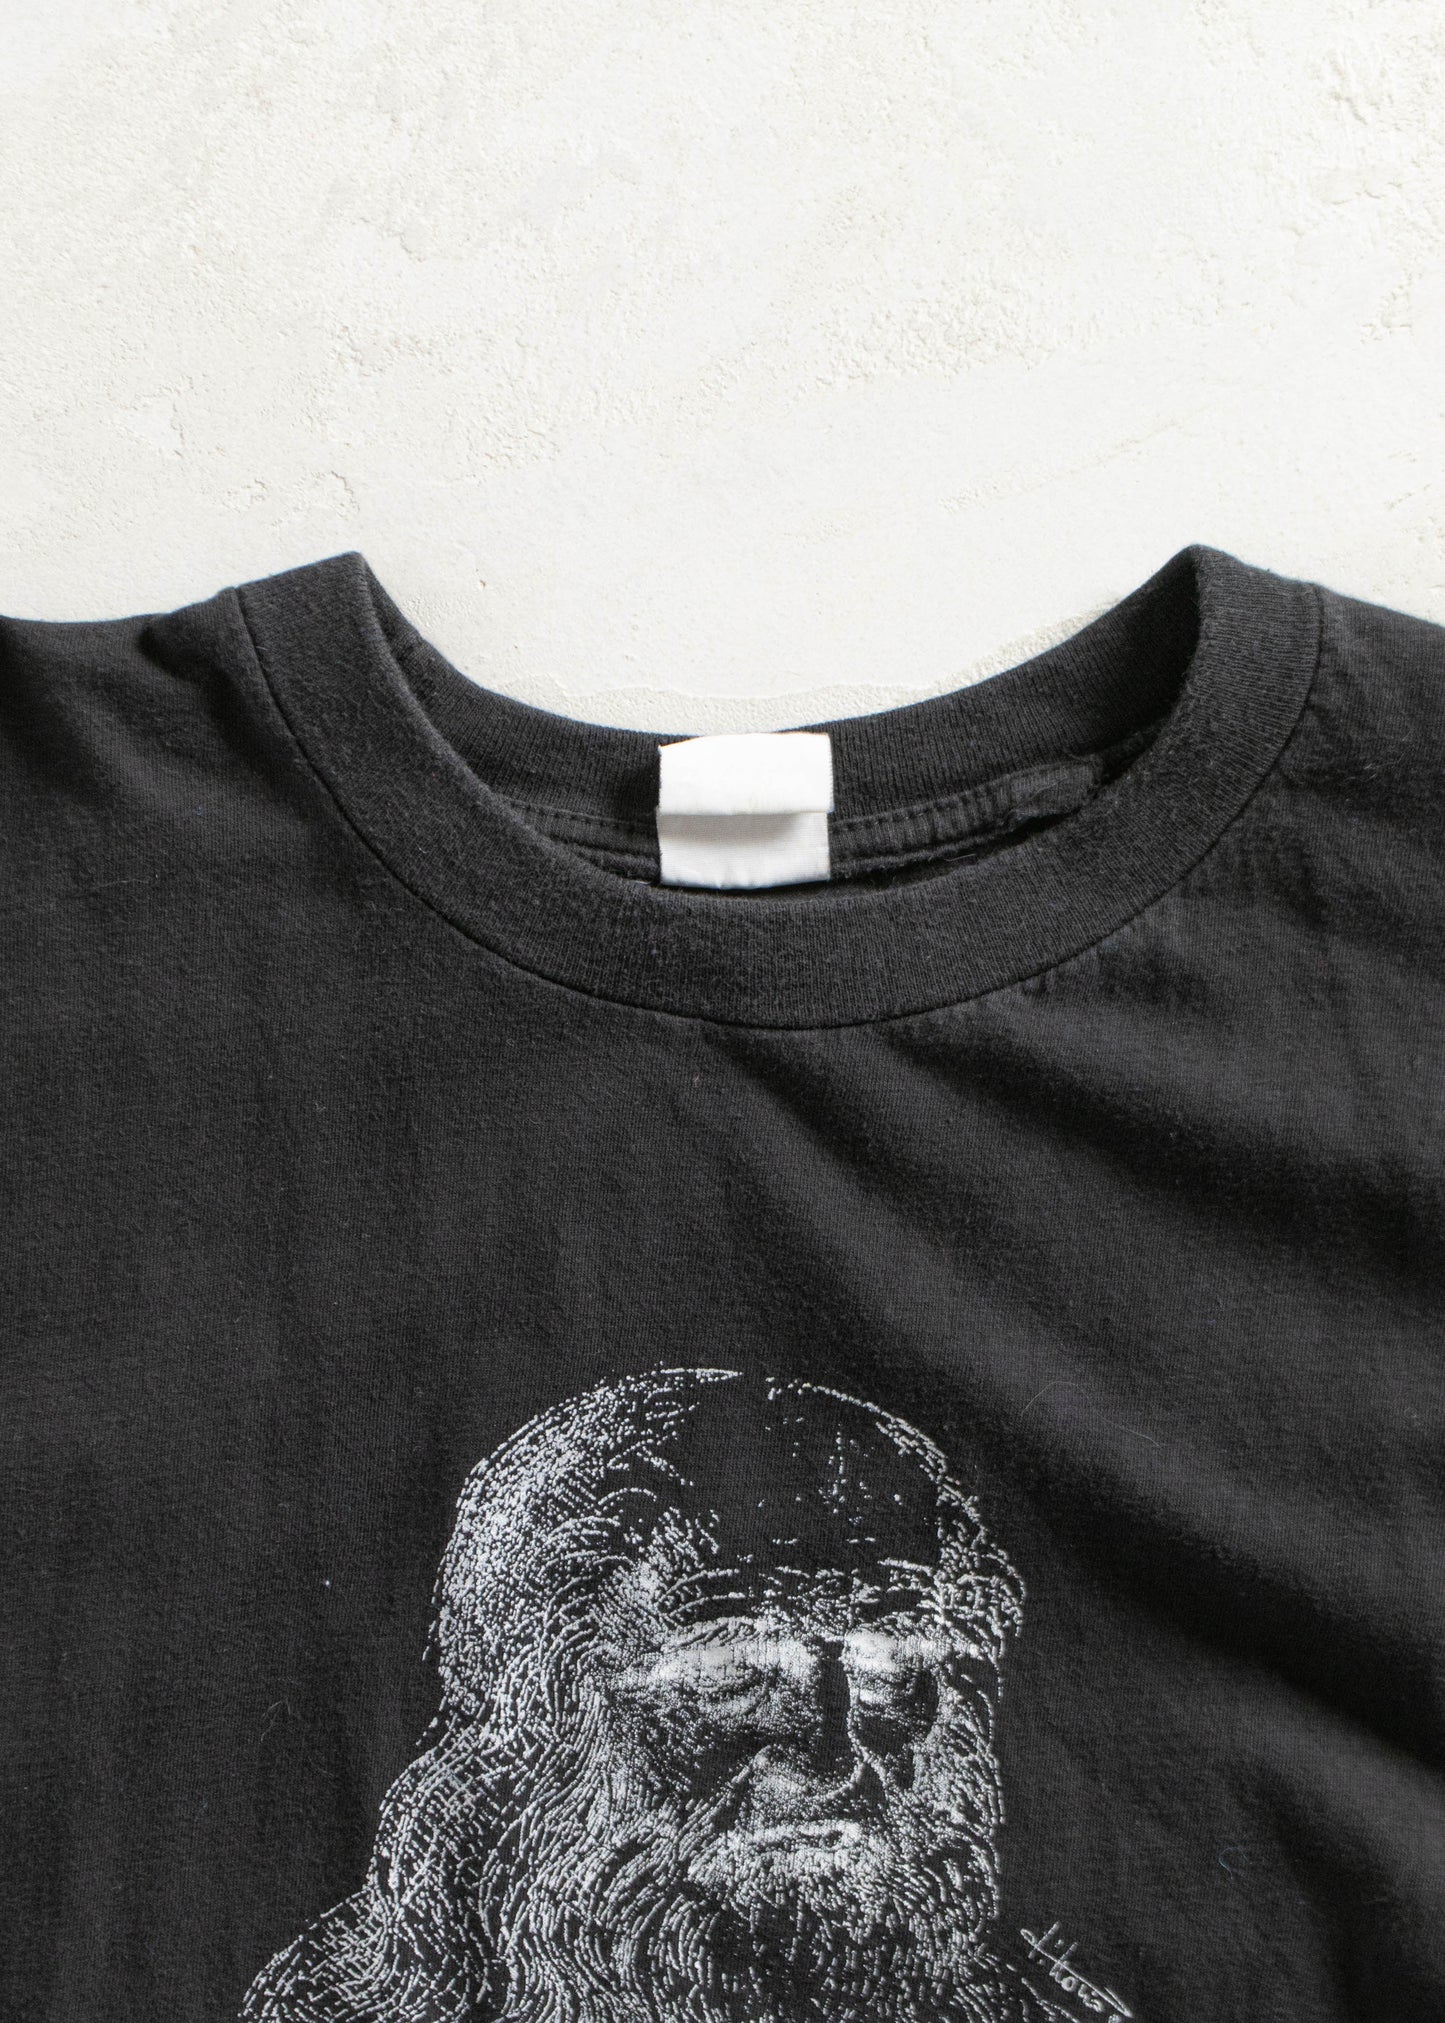 Leonardo Da Vinci T-Shirt Size M/L